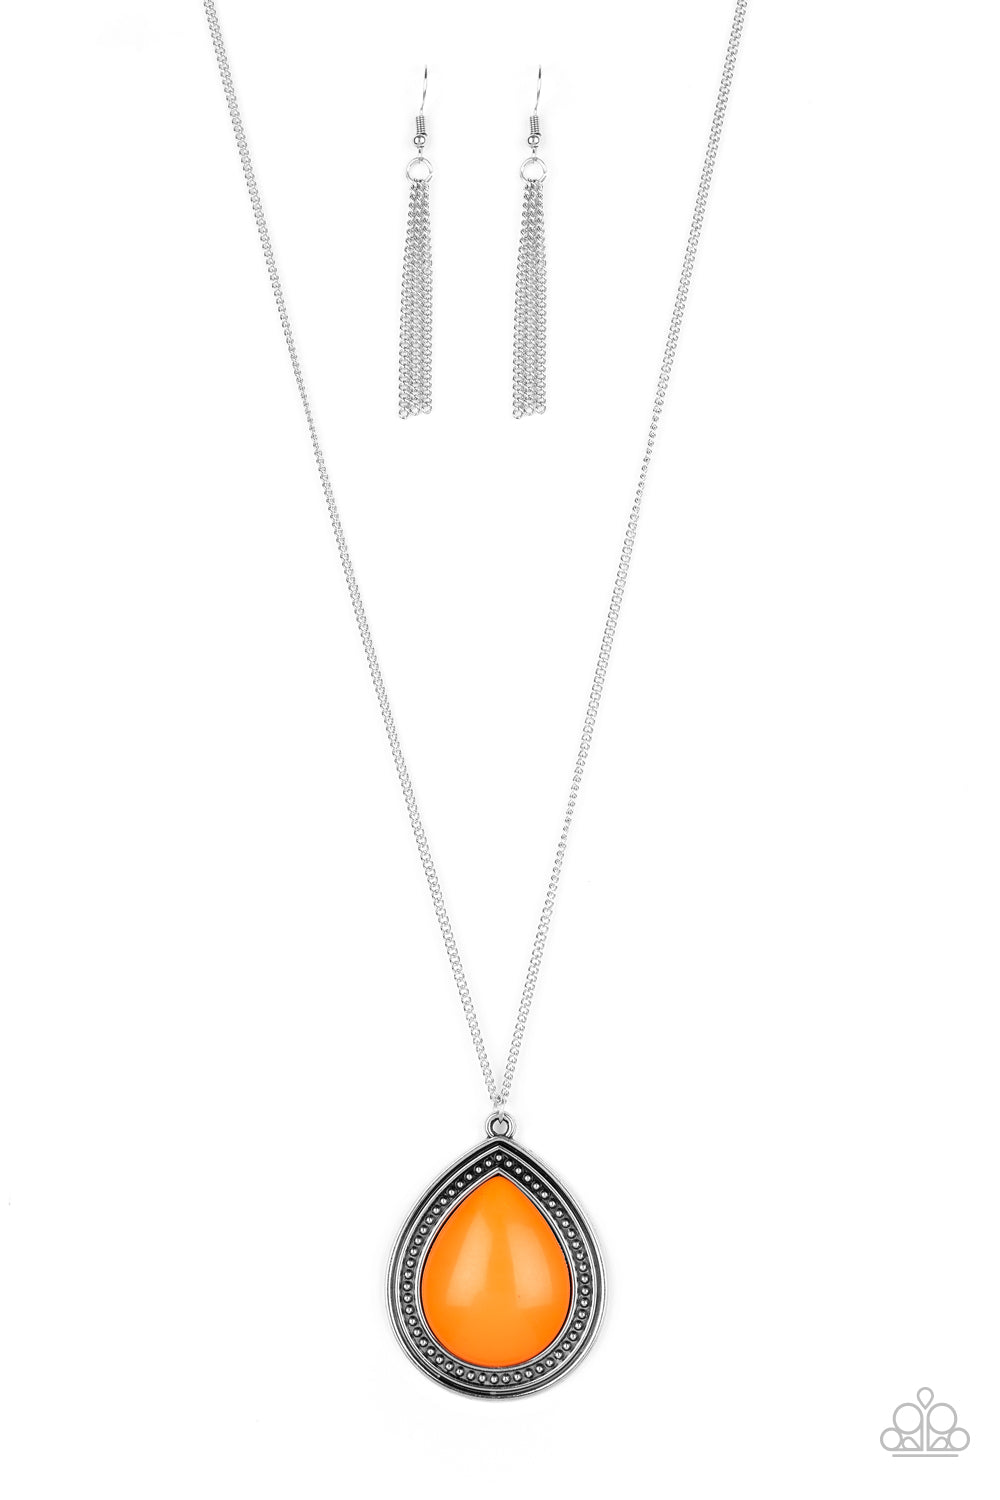 Chroma Courageous - Orange Necklace